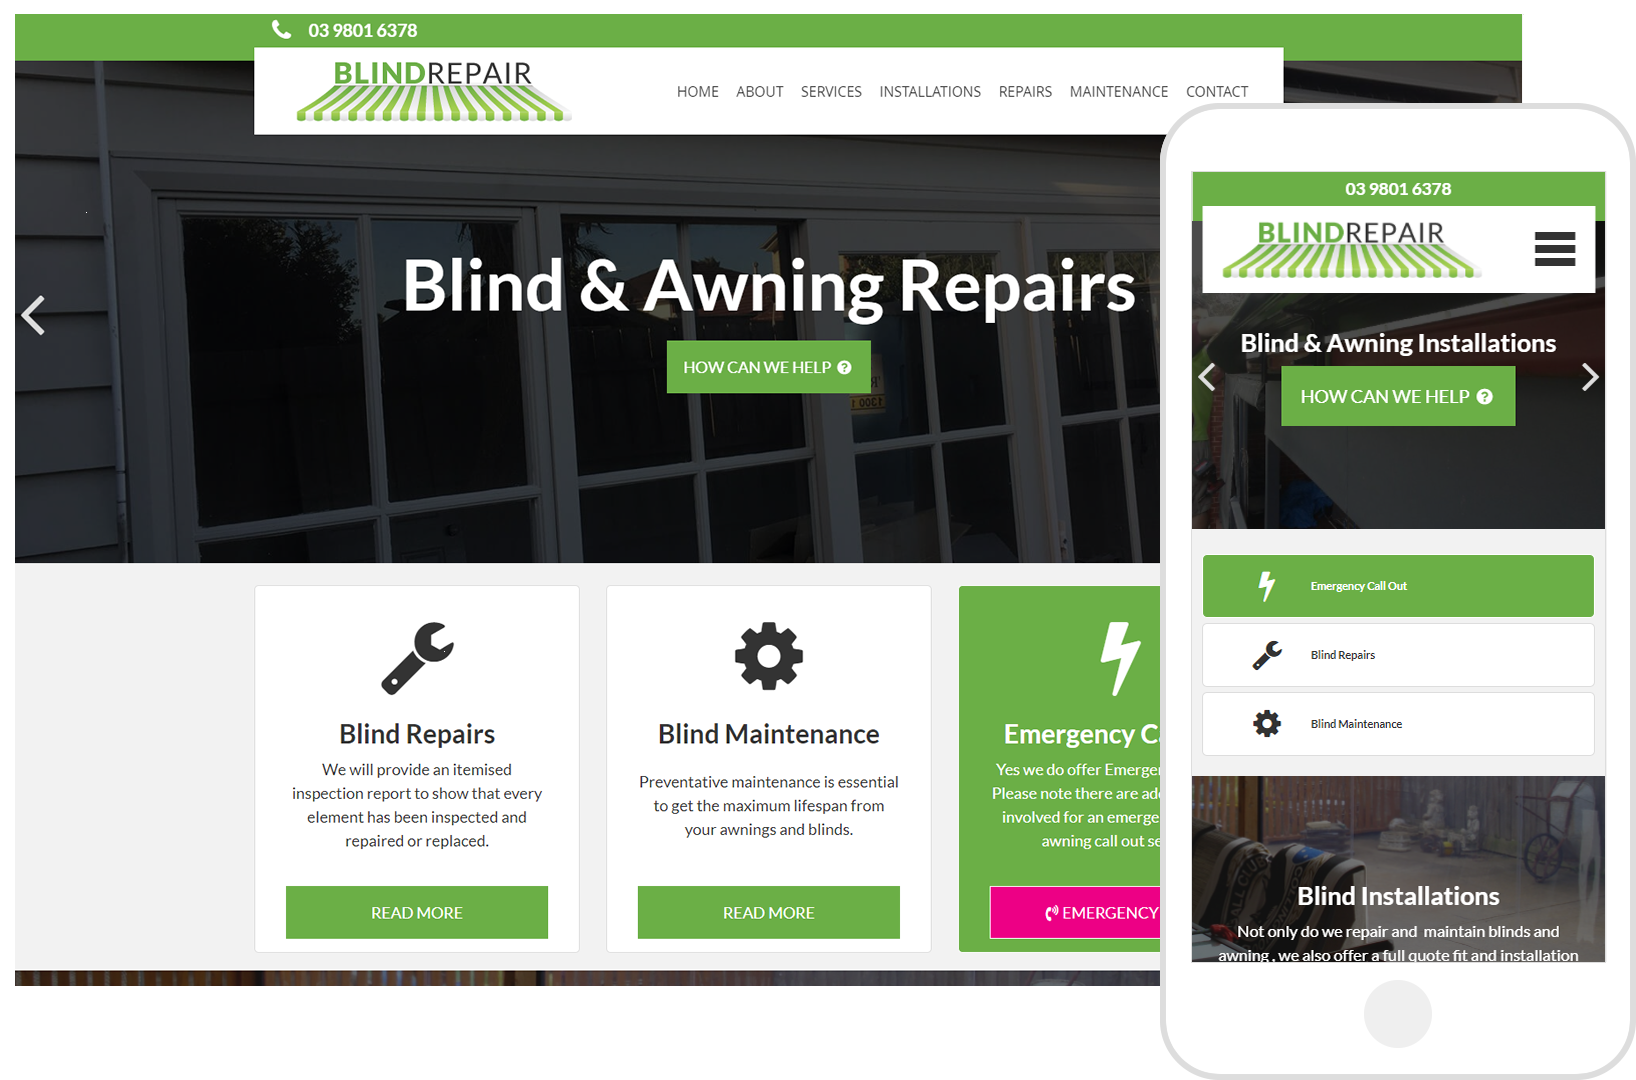 Blind & Awning Repairs